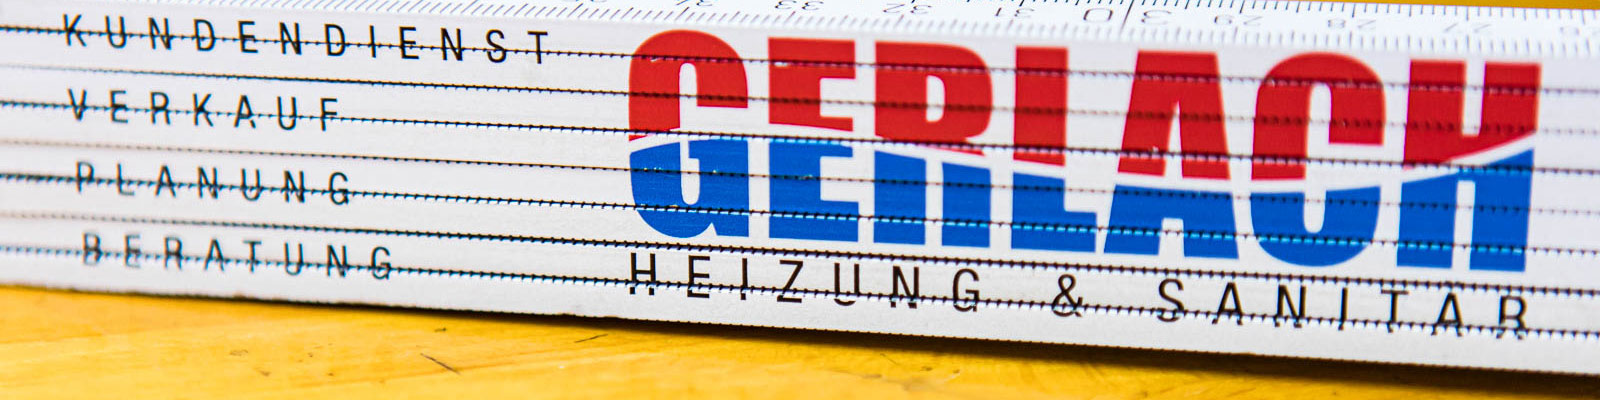 W. Gerlach GmbH - Heizung & Sanitär in Frechen - Metermaß, Zollstock, Firmenlogo